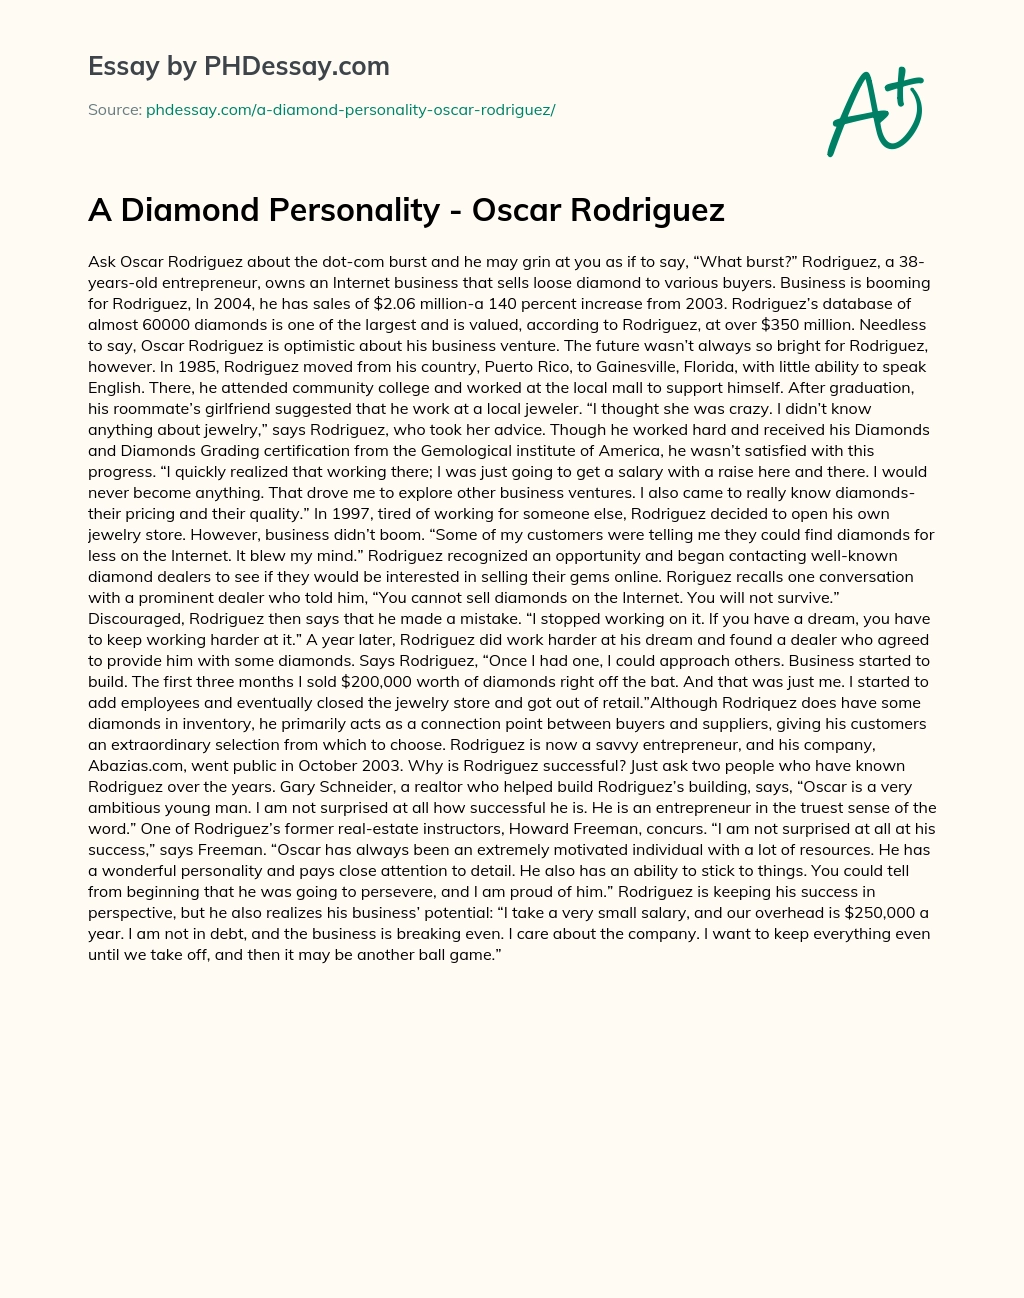 A Diamond Personality – Oscar Rodriguez essay